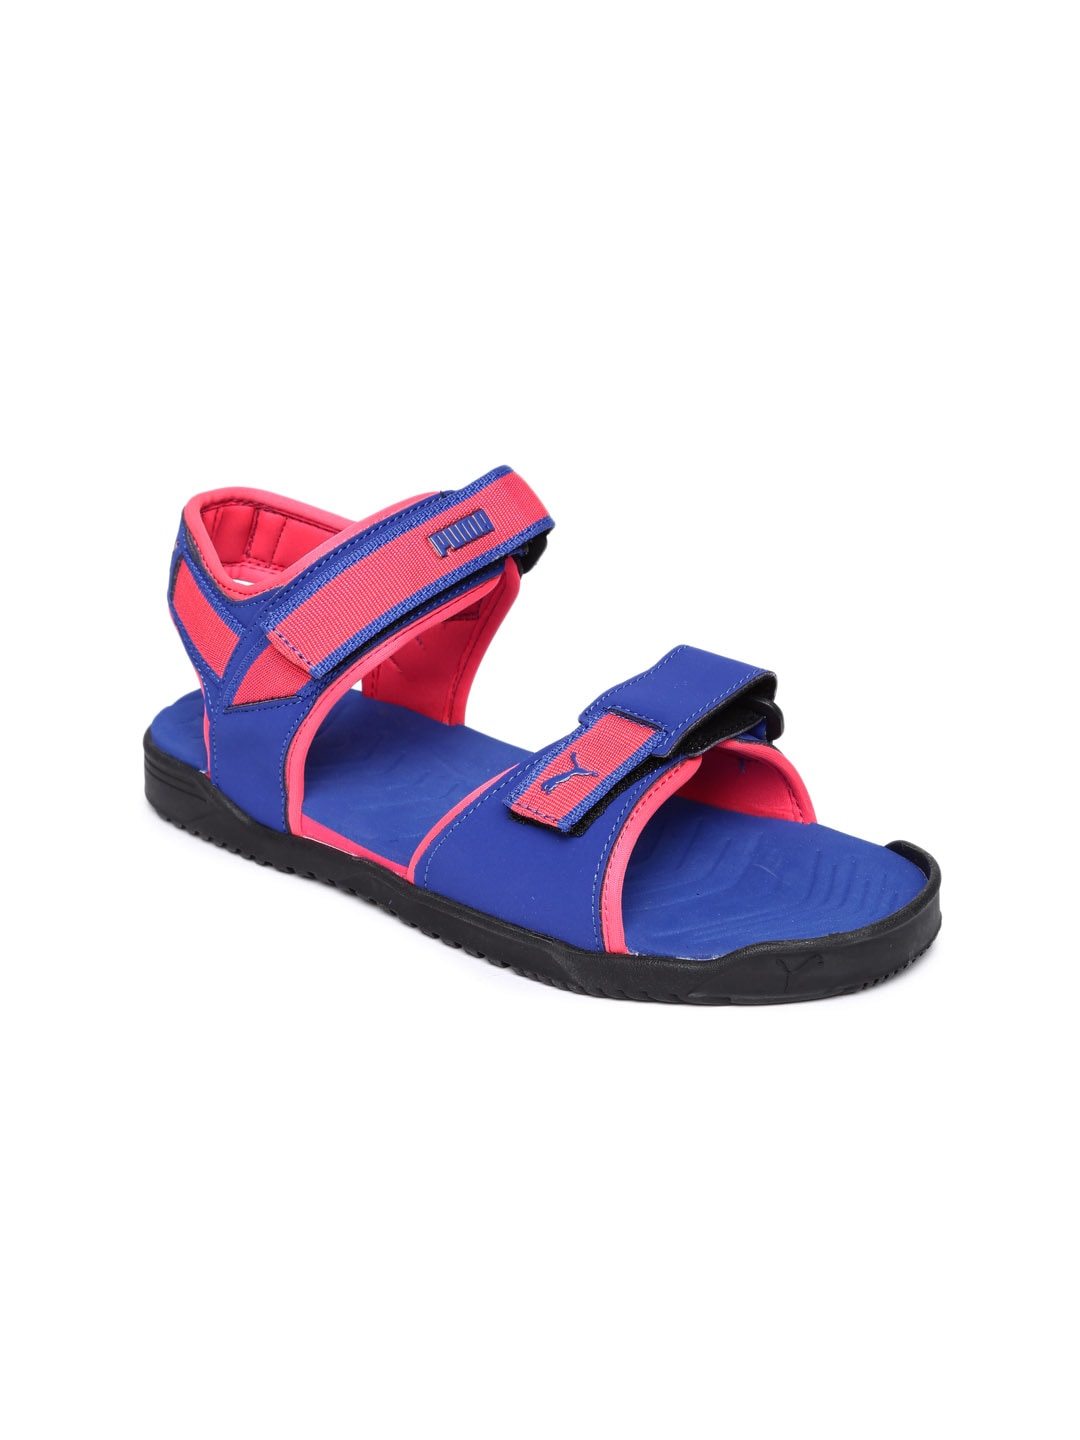 Puma Women Pink Blue Colourblocked Shine Sports Sandals Price in India